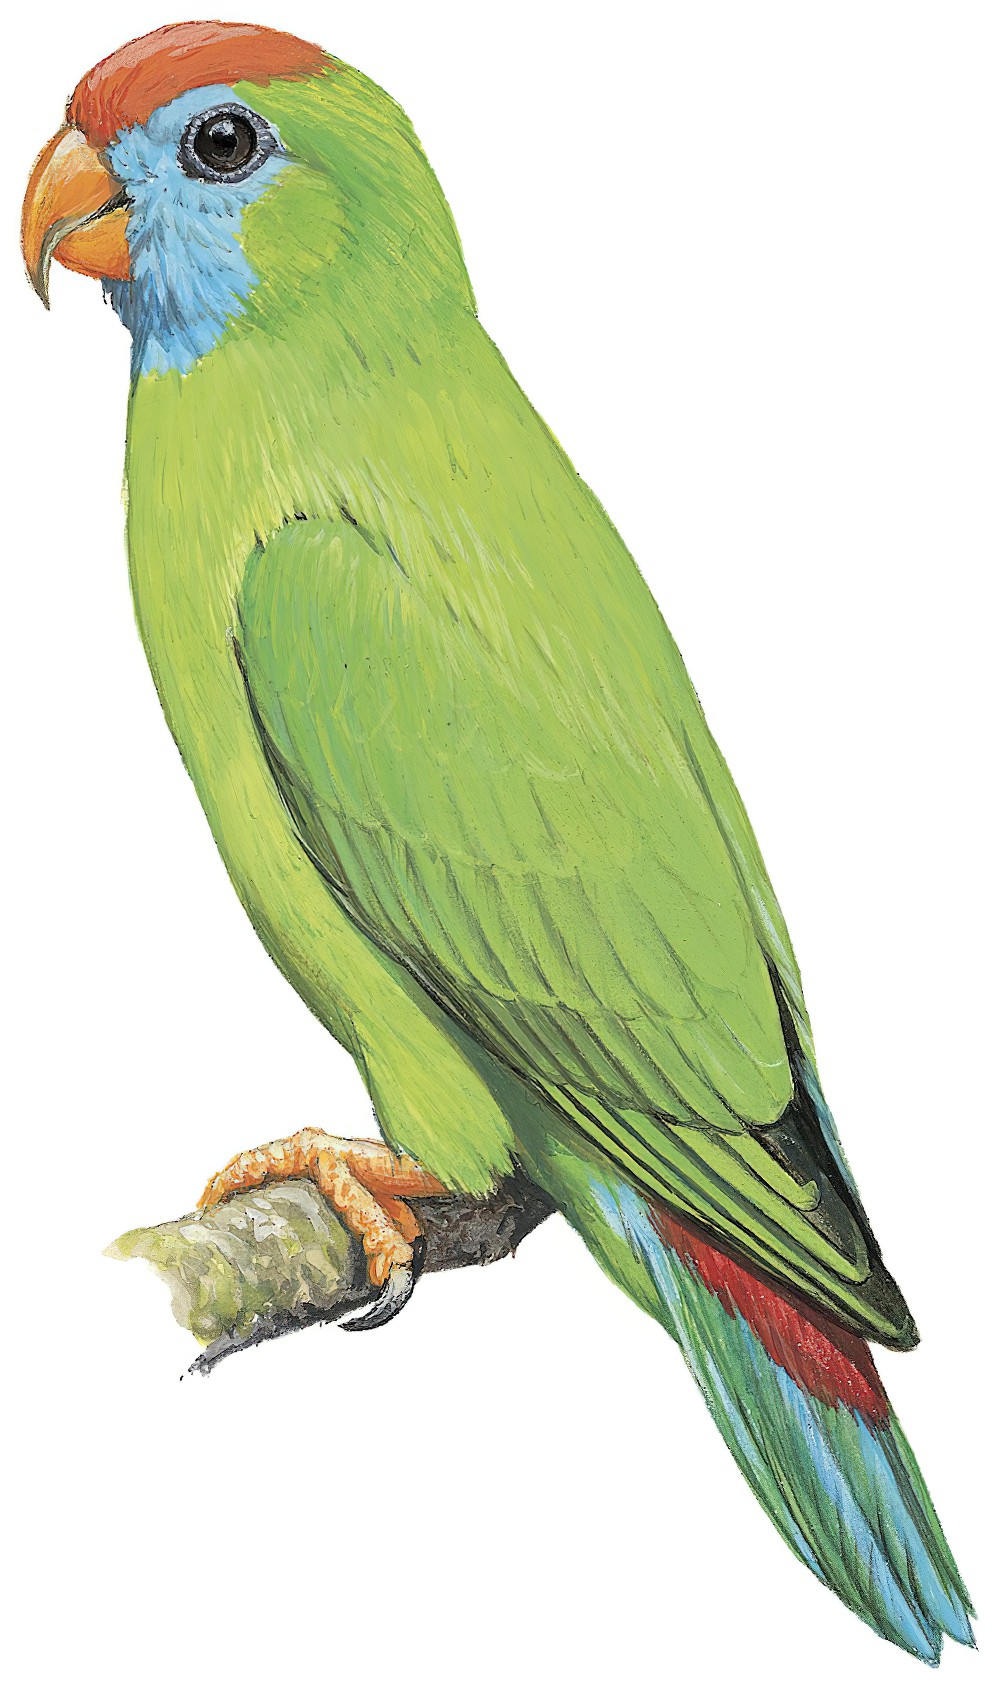 Camiguin Hanging-Parrot / Loriculus camiguinensis